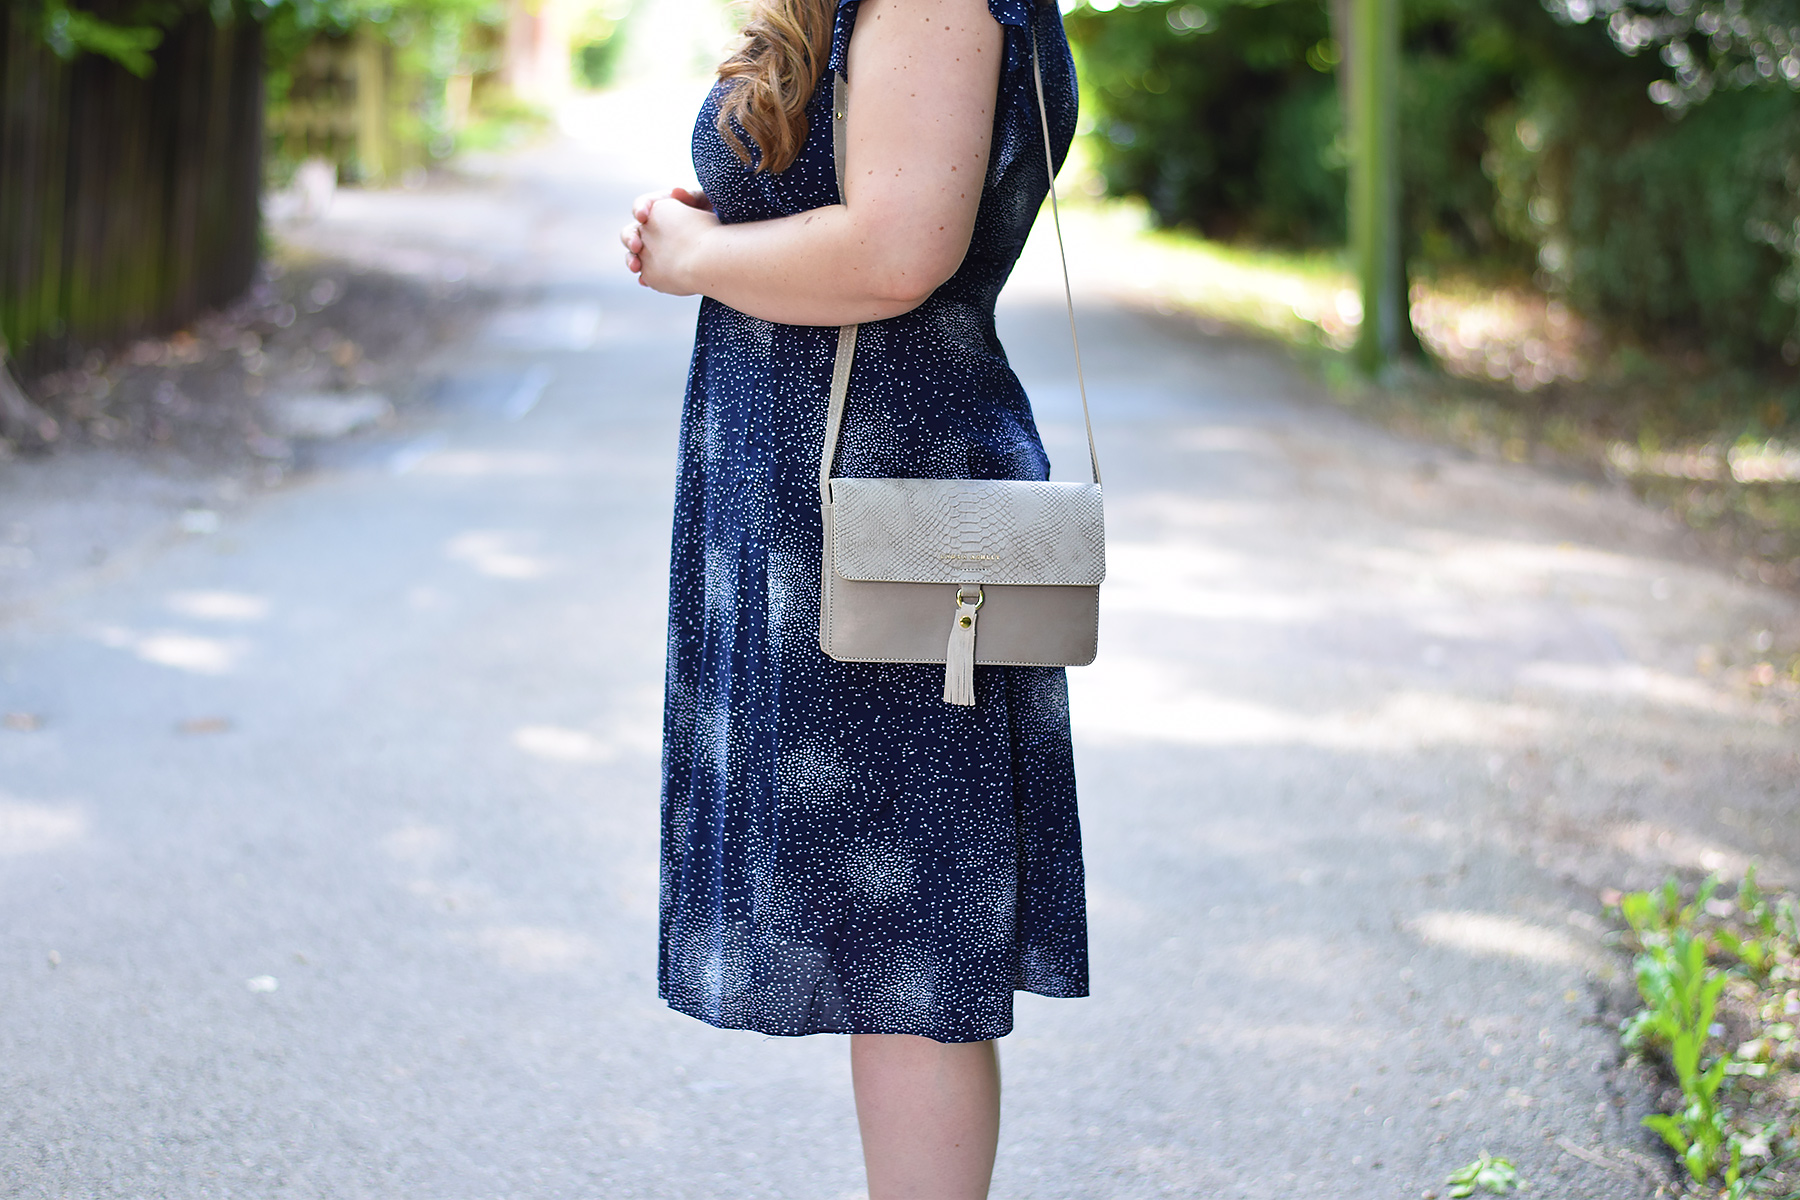 laura Ashley Navu Starburst dress and tassel detail bag